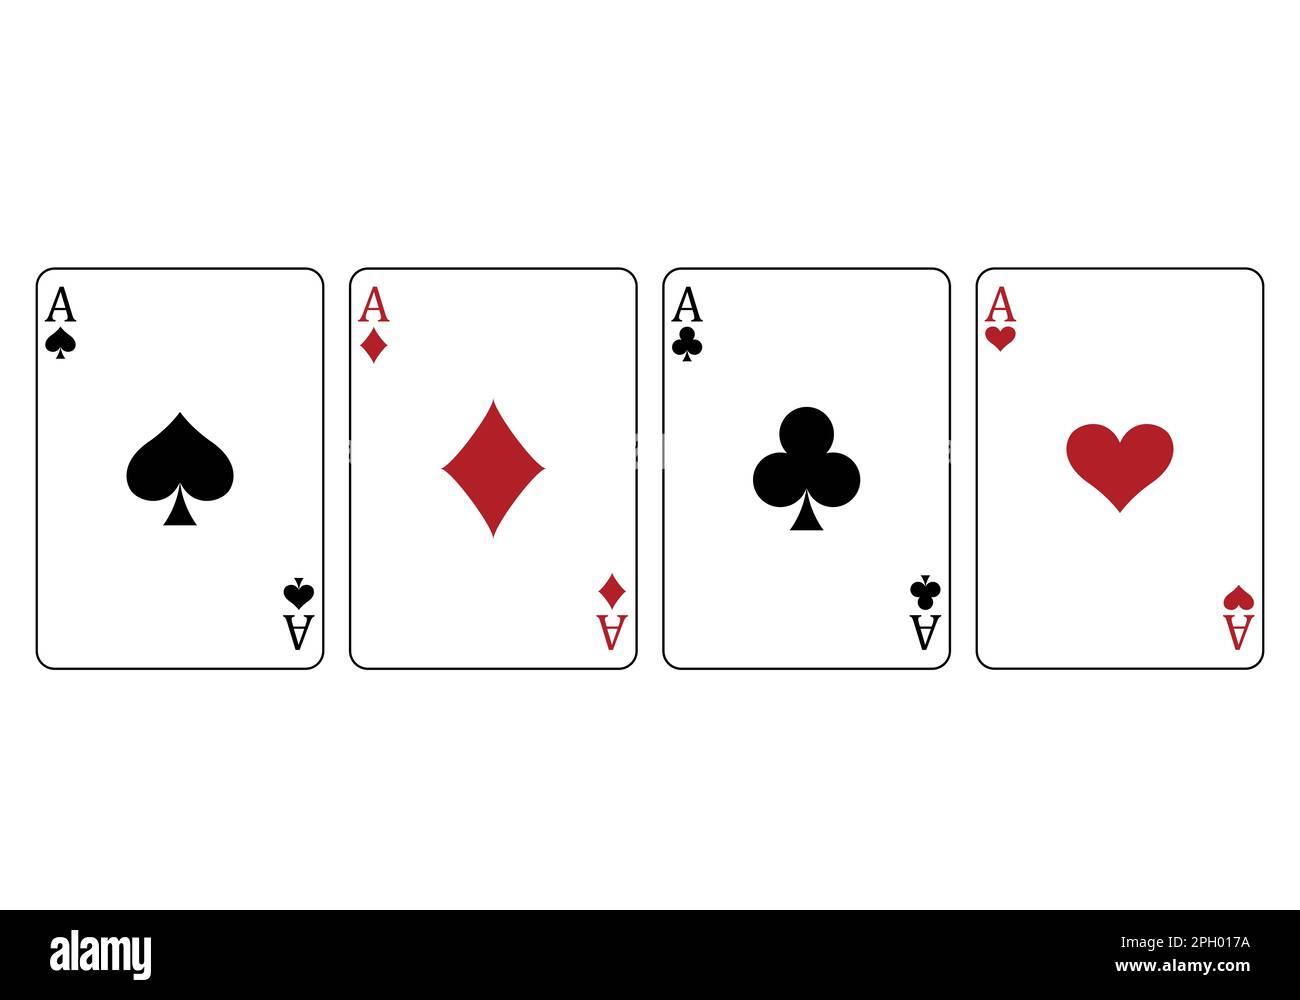 Spielkarten – ein Satz Ass-Karten, Herzensäcke, Pik, Knüppel und Diamanten-Karten, Vektorgrafik Stock Vektor